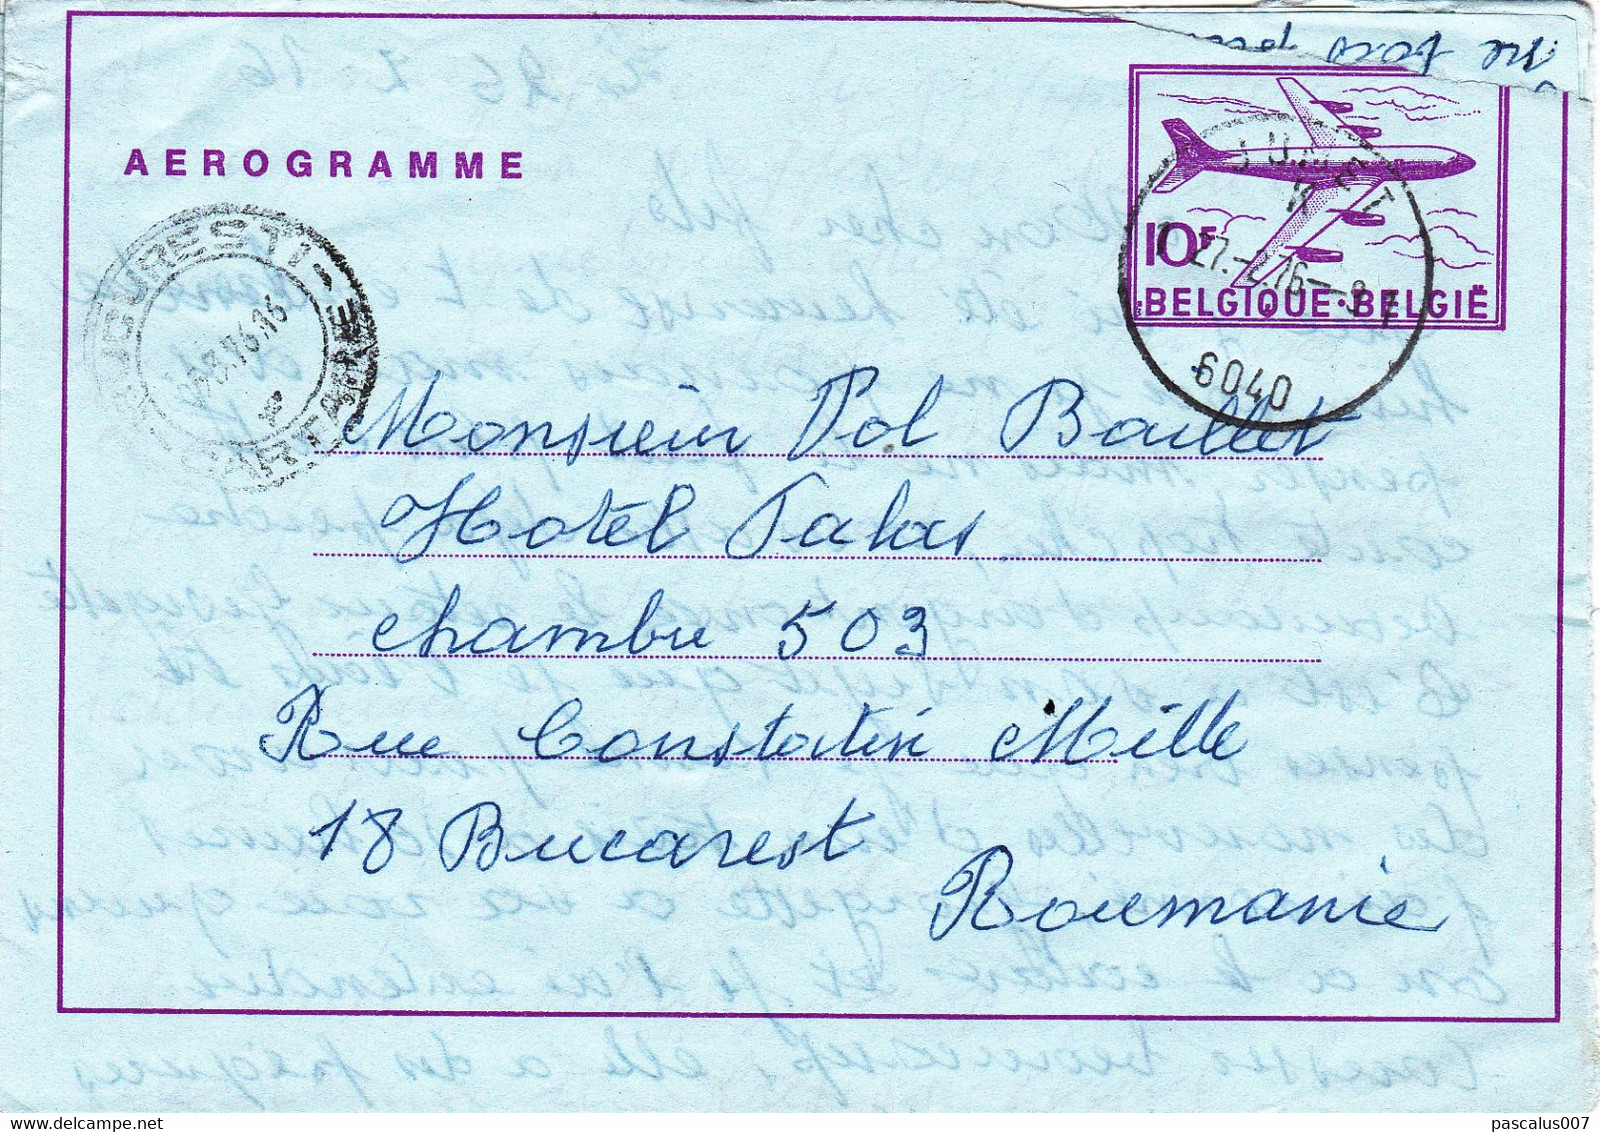 B01-249 P147-017III - Entier Postal - Aérogramme N°17 II(F) - Sabena - 10 F De 1974 Belgique Roumanie - Aérogrammes